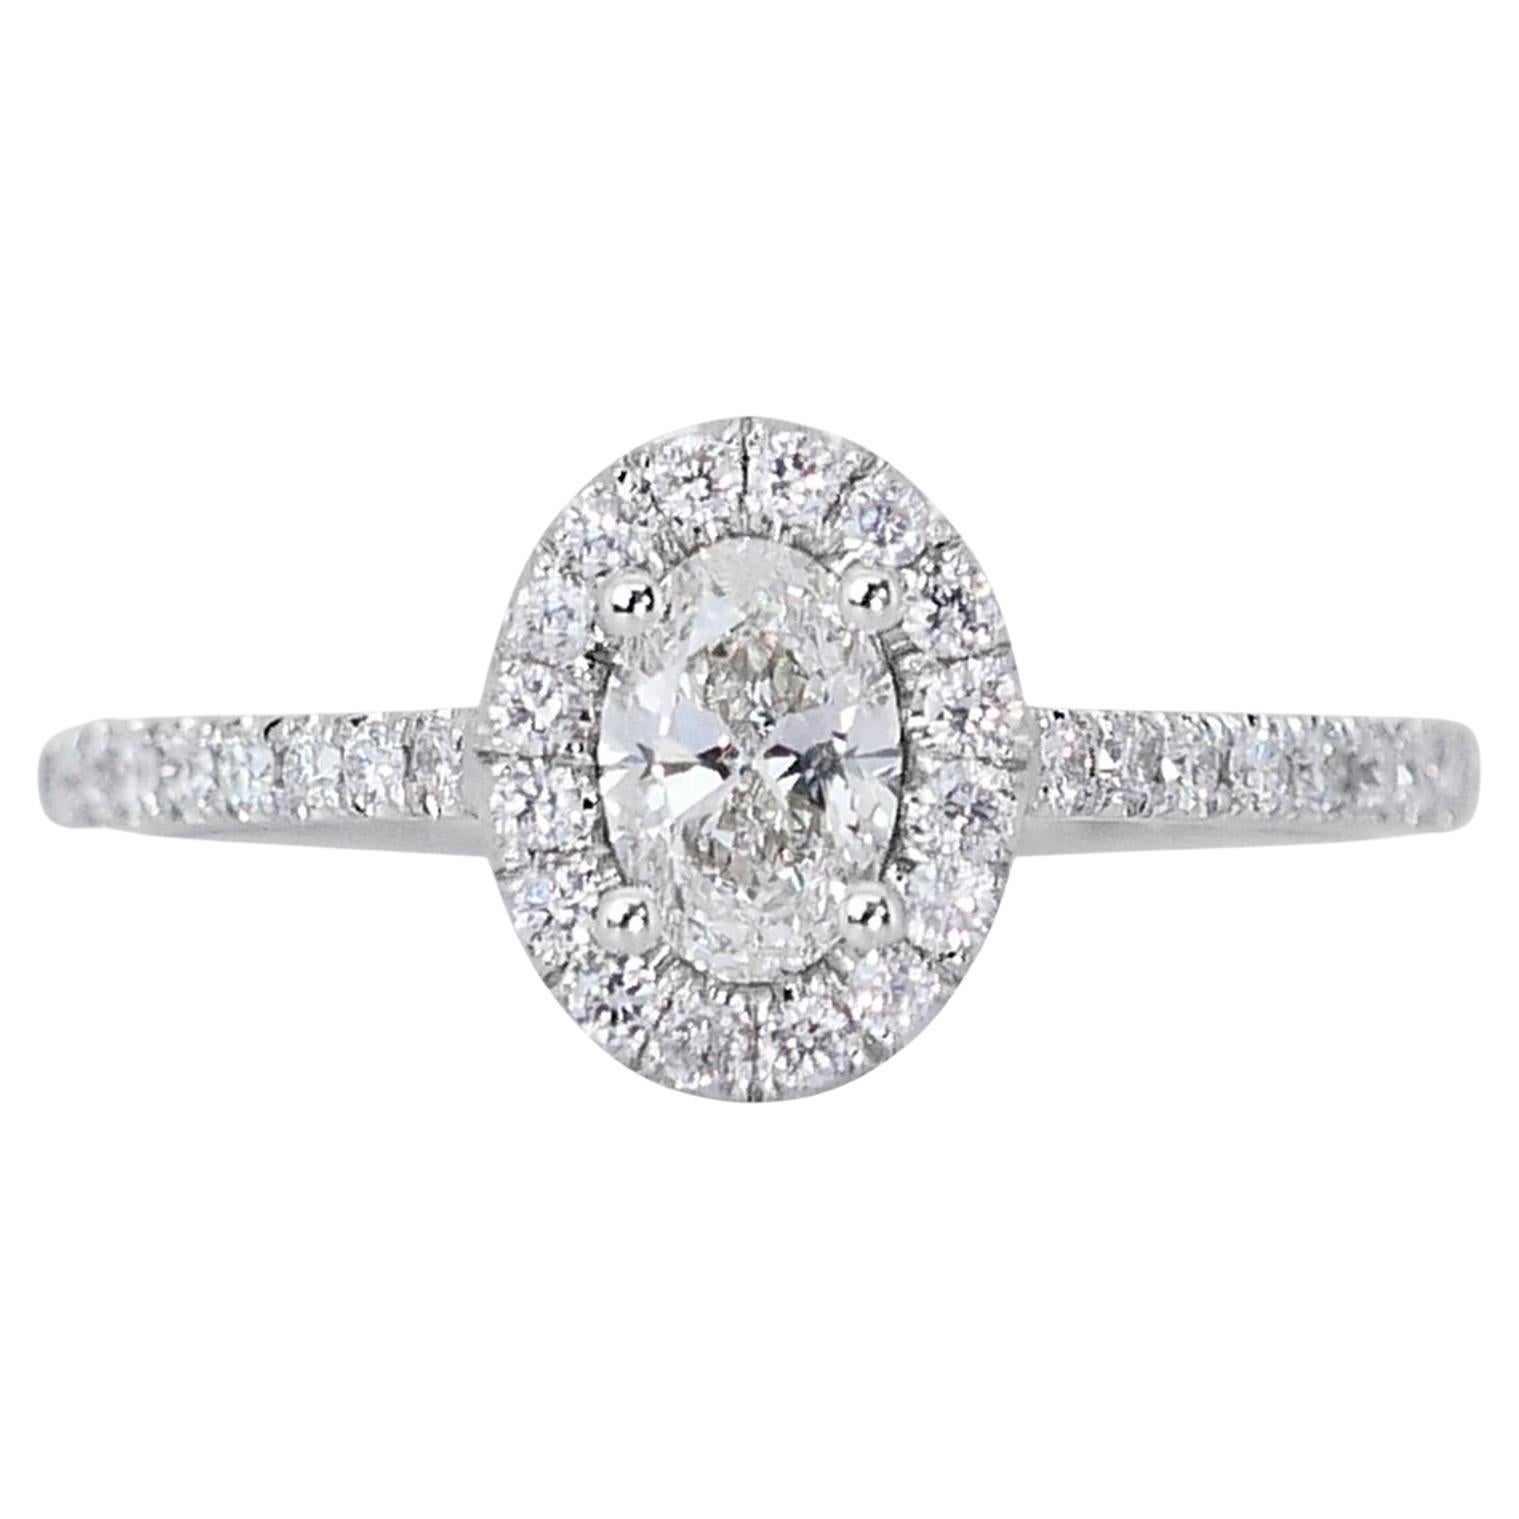 Fesselnder 1,01 ct Oval Diamond Halo Ring in 18k Weißgold - GIA zertifiziert